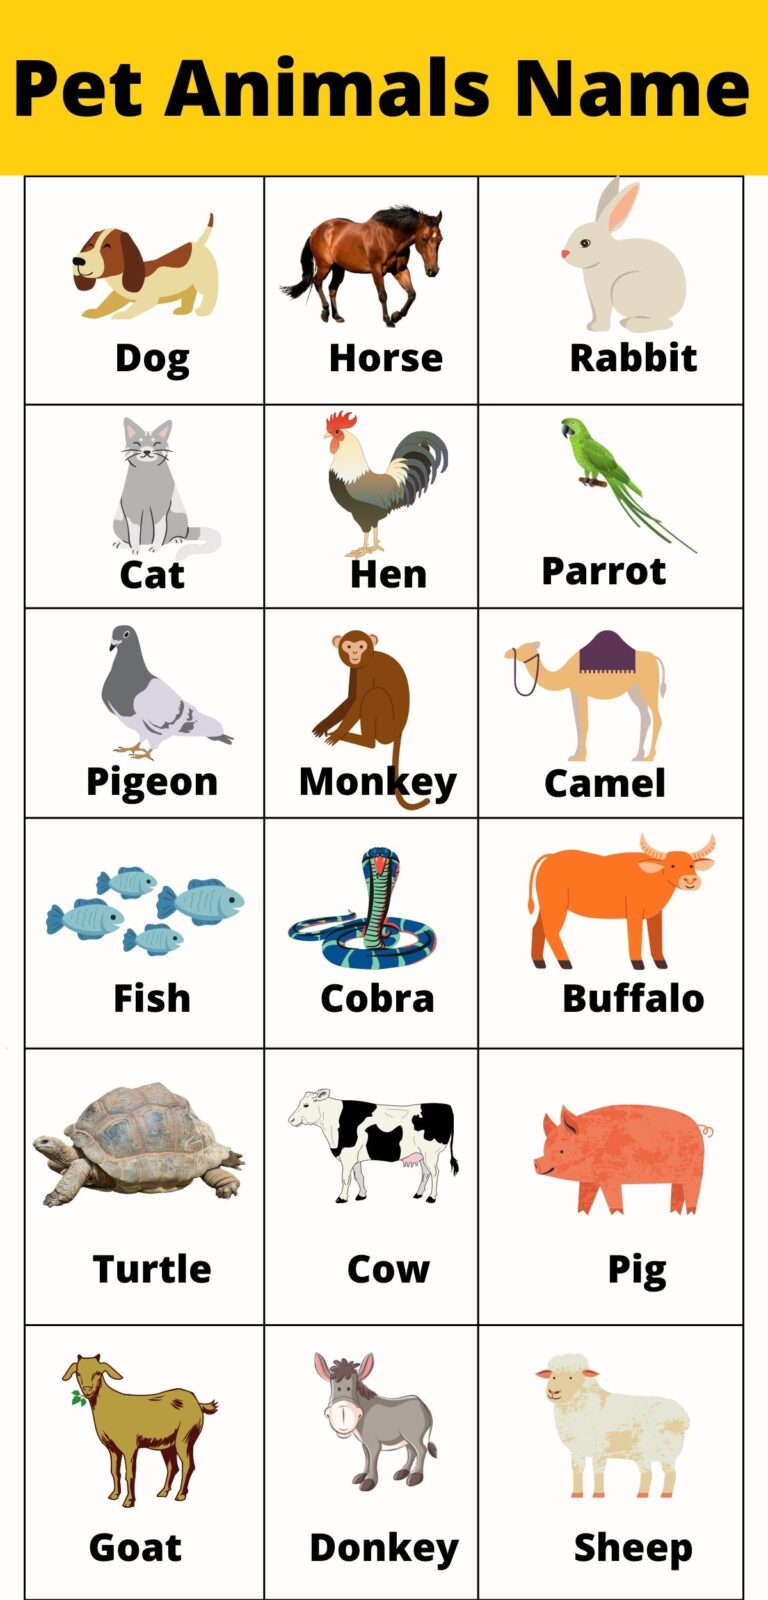 Pet Animals Name English & Hindi With Images - Animals Name